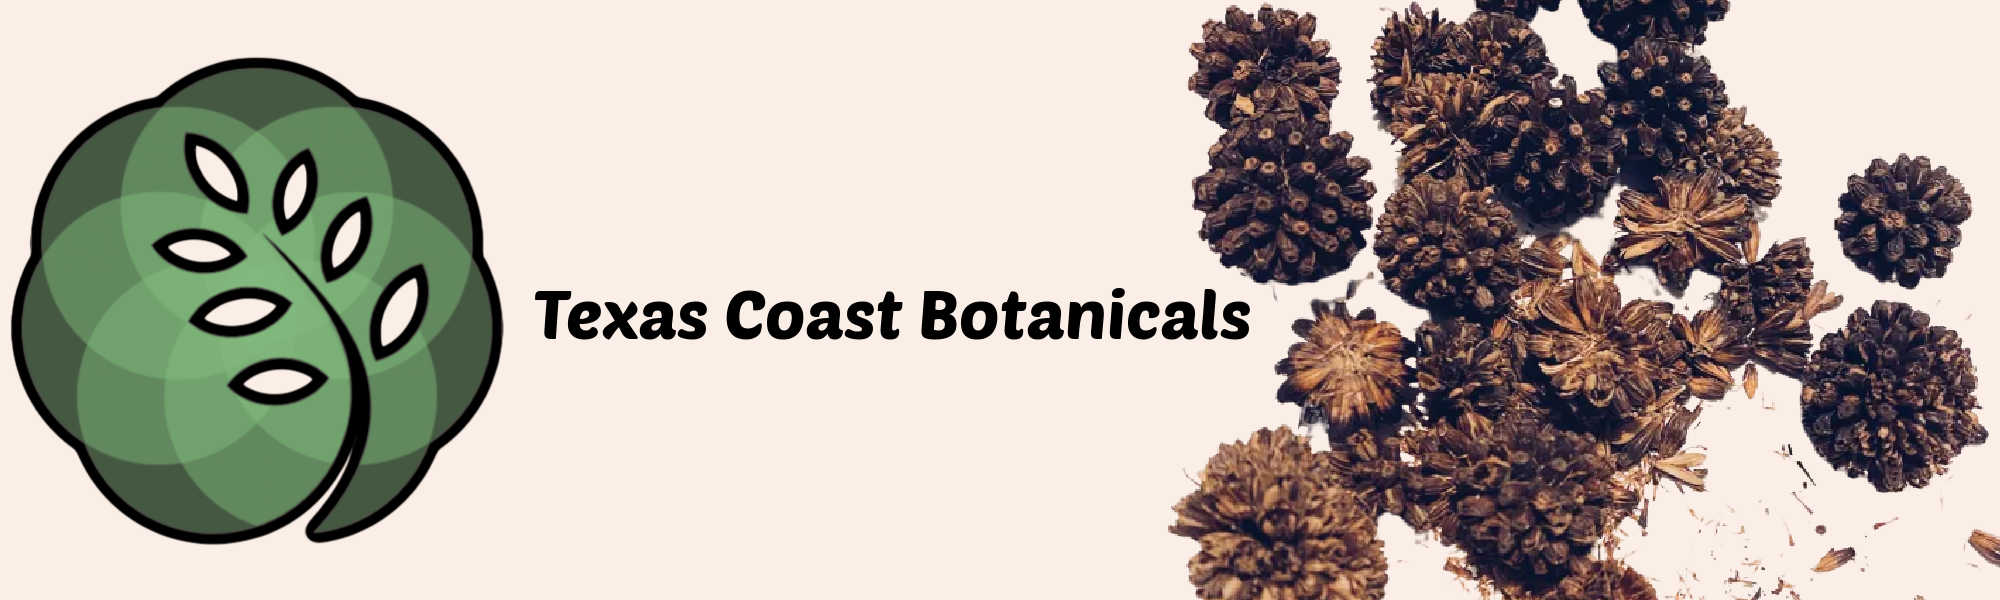 image of texas coast botanicals you can buy kratom seeds